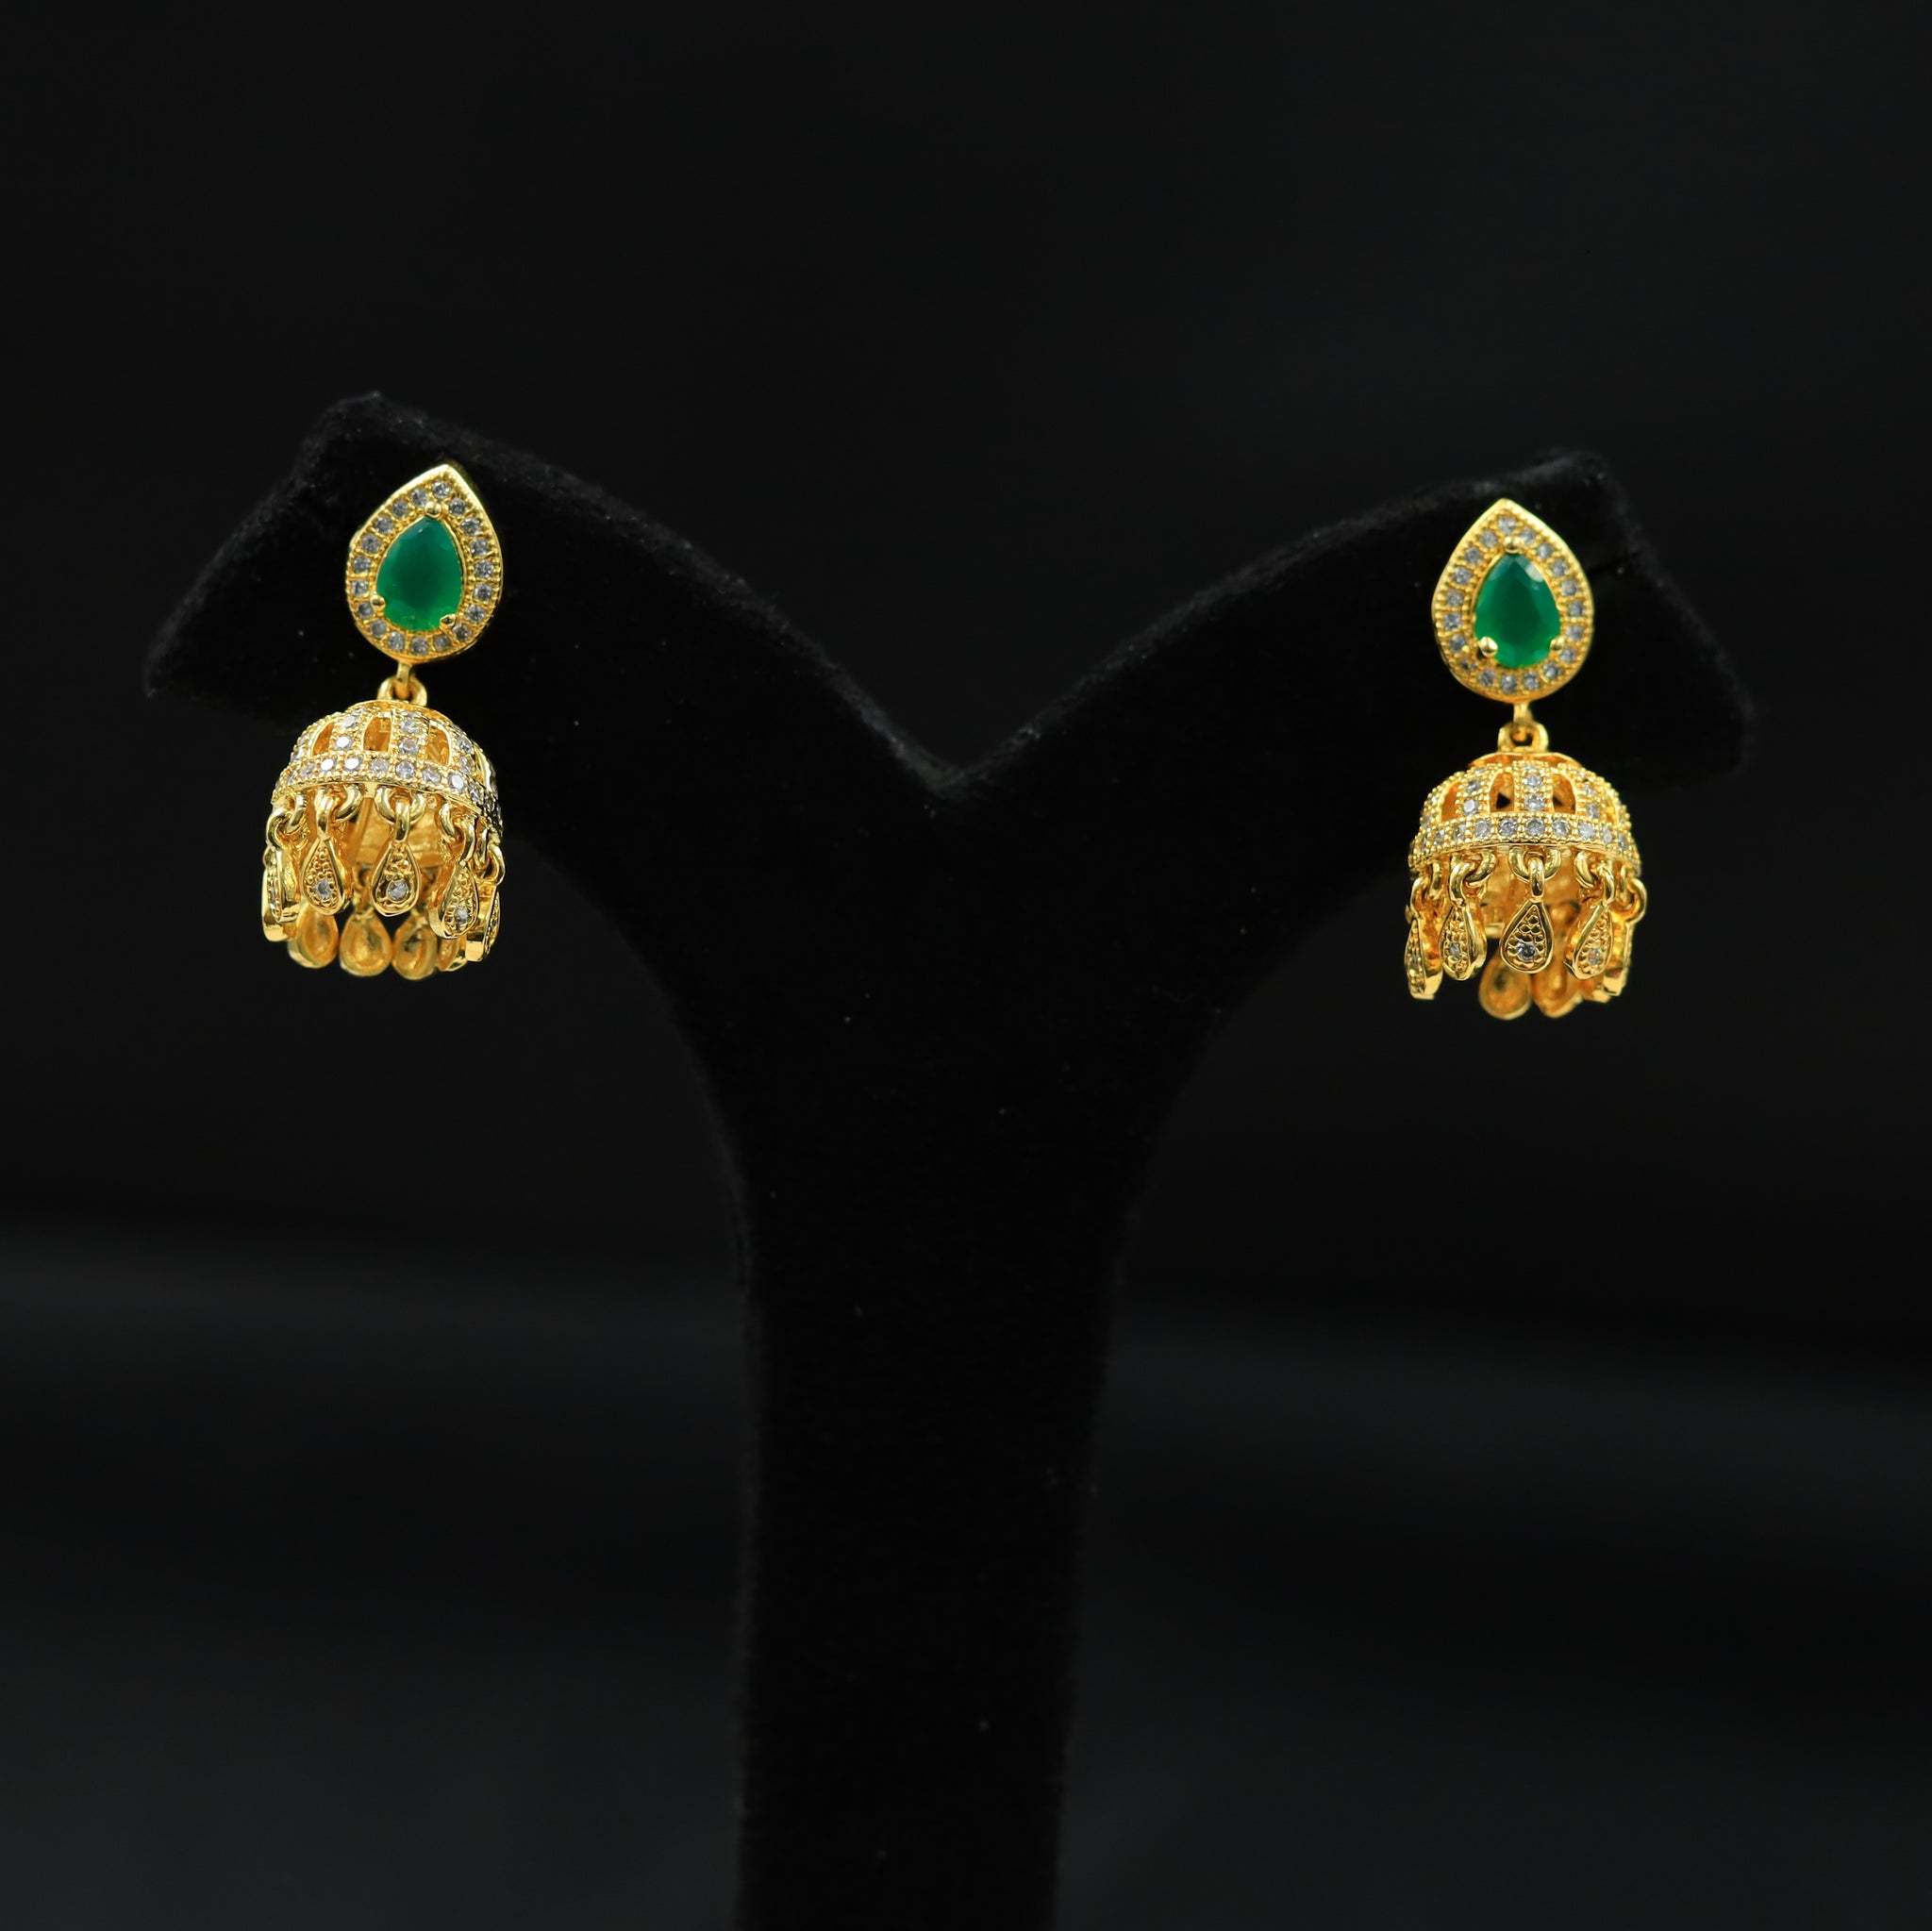 Elegant Diamond Jhumki In Gold Finish In Gold Finish With Green Stone 11314-7312